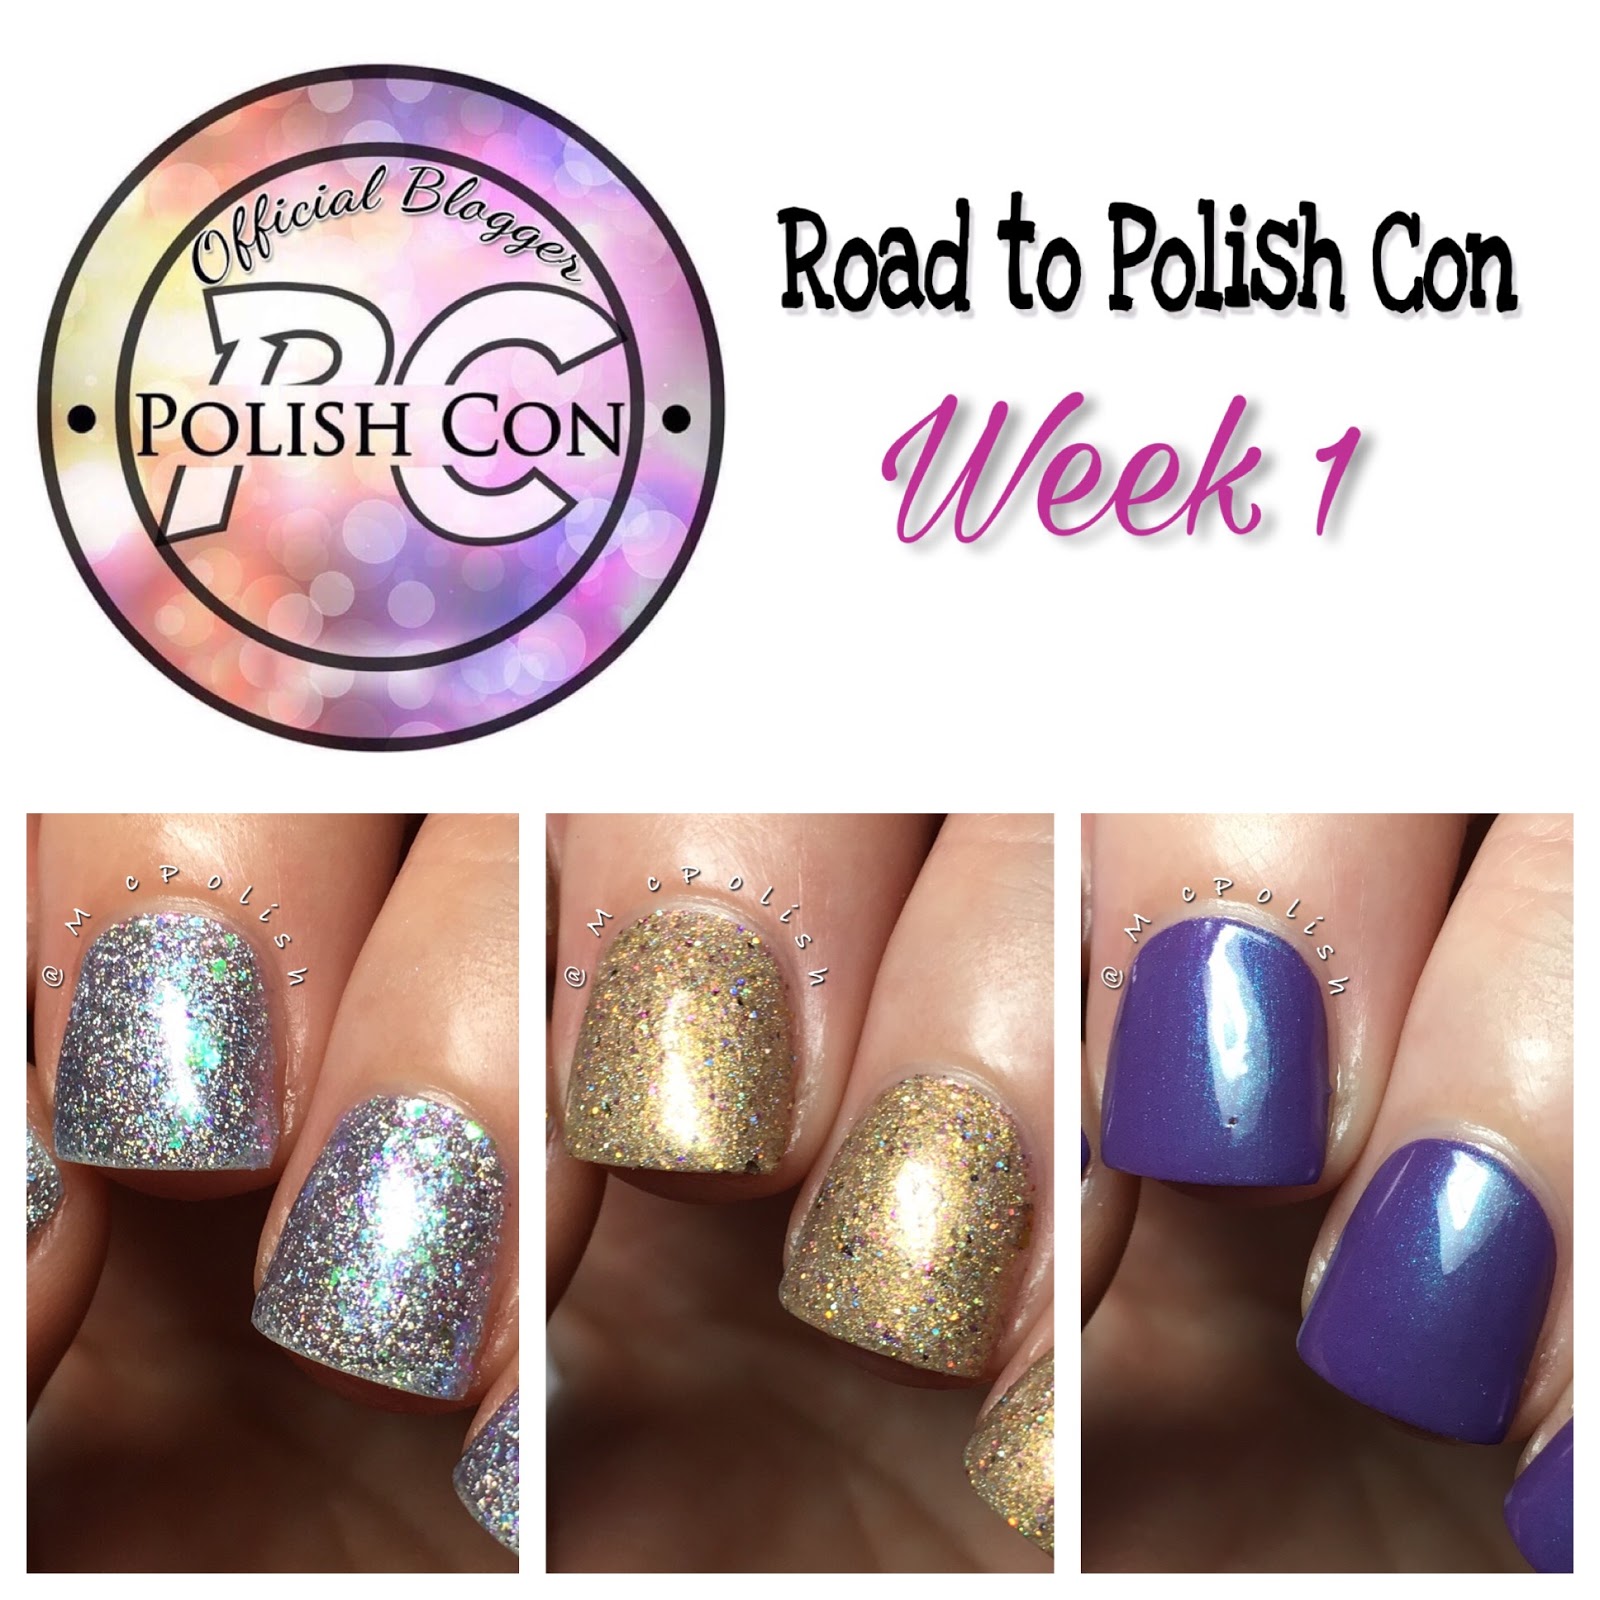 Road to Polish Con - Week 1 - McPolish